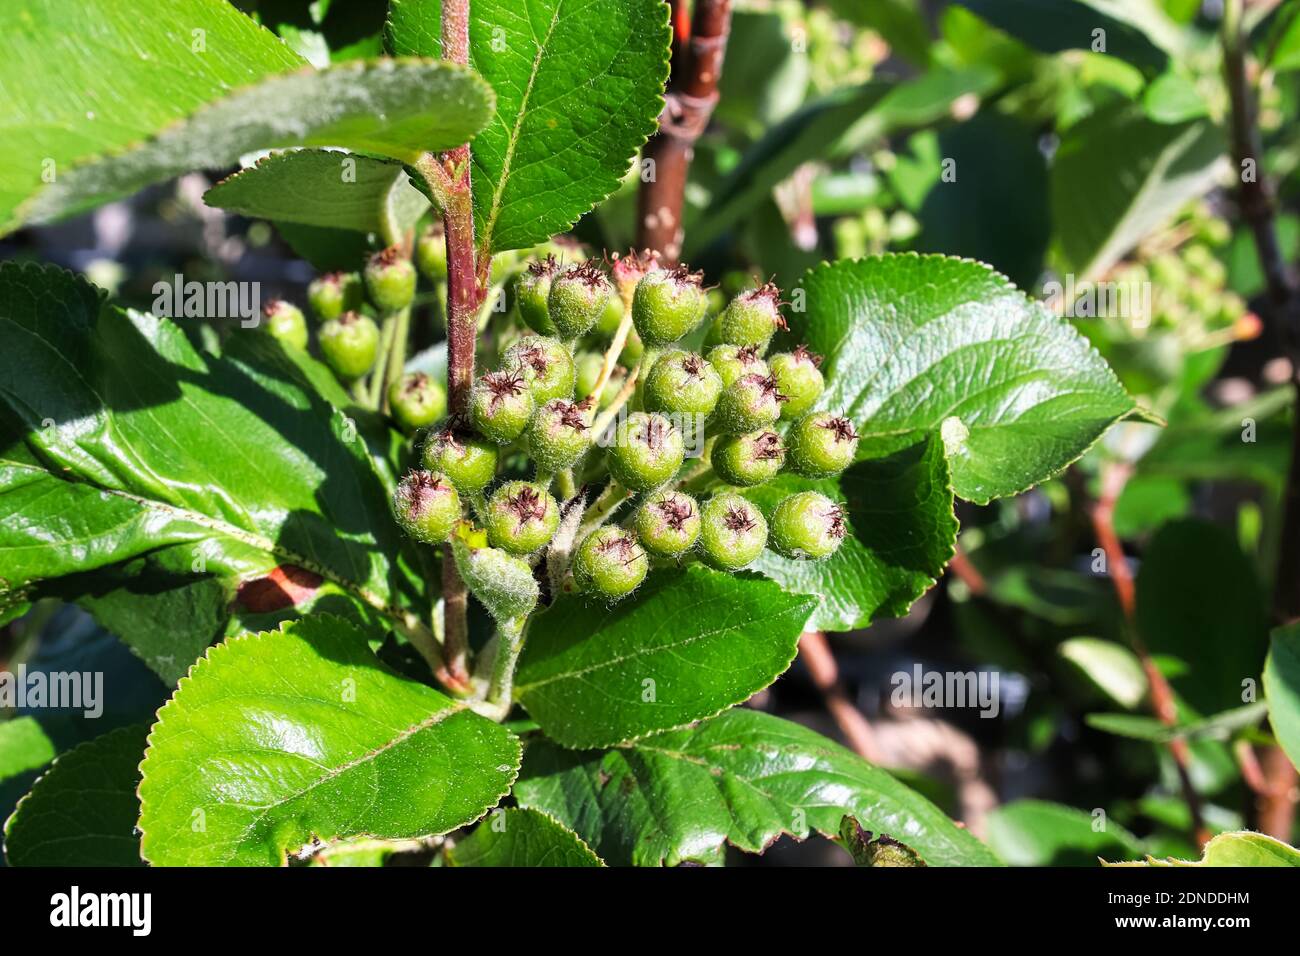 Closeup of green fuzzy viking chokecherry berries Stock Photo